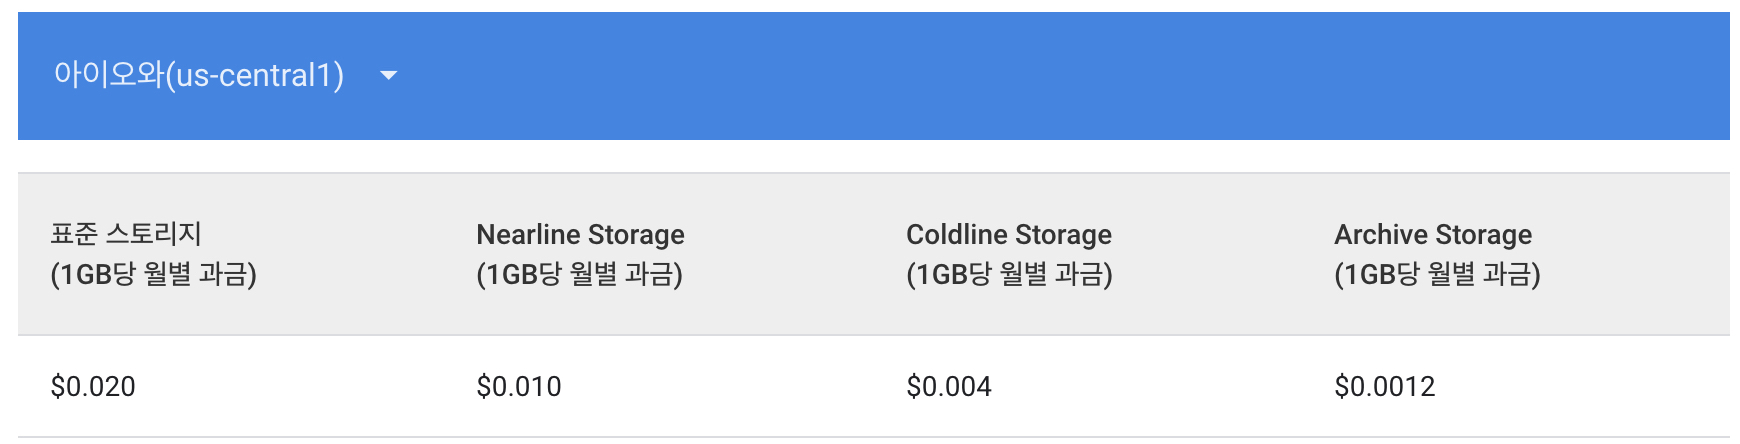 GCS Data Storage Price